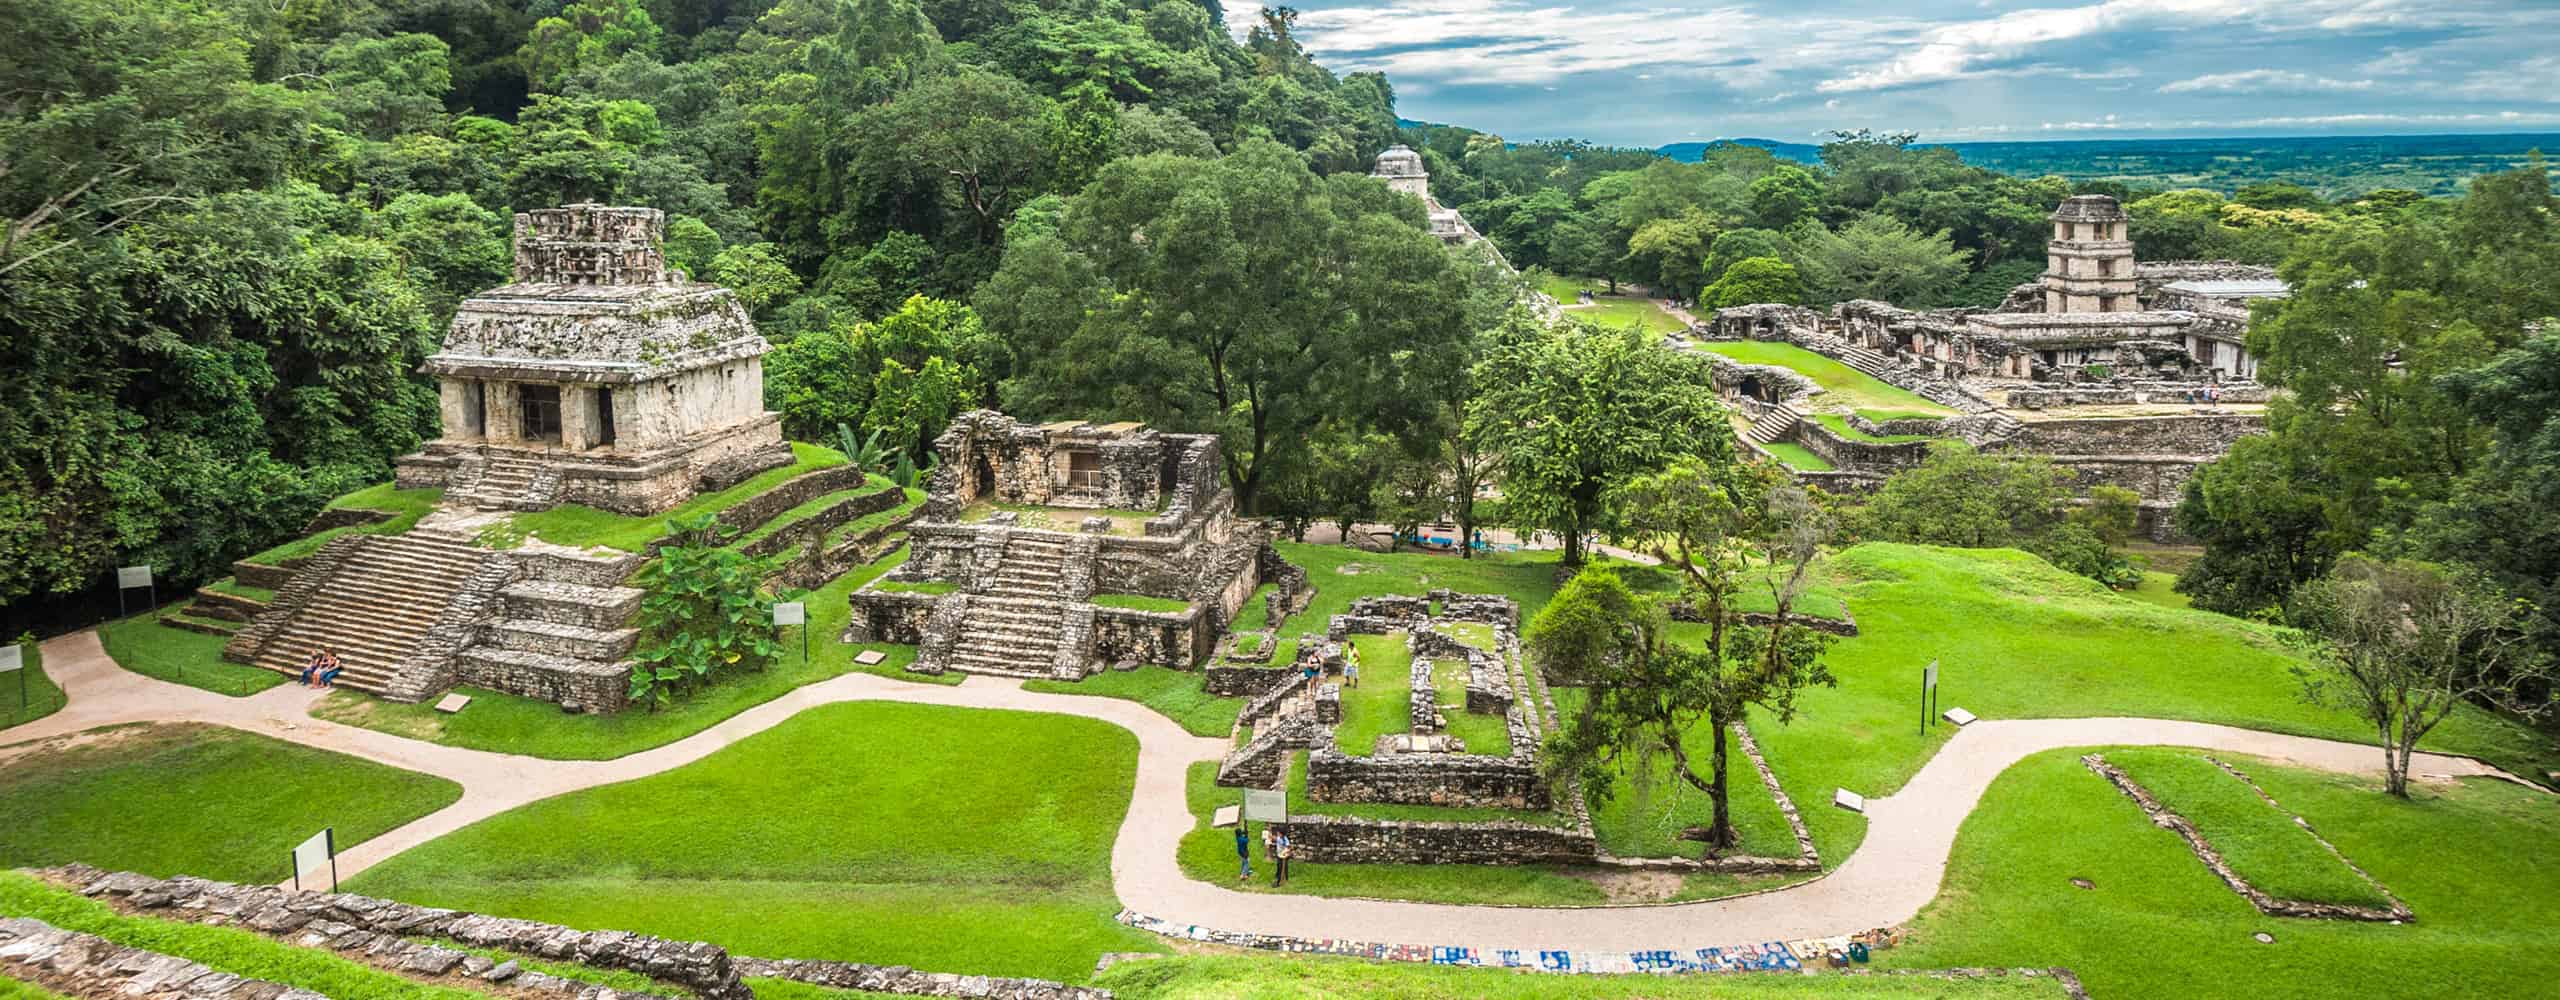 Ruins Of Palenque, Mexico